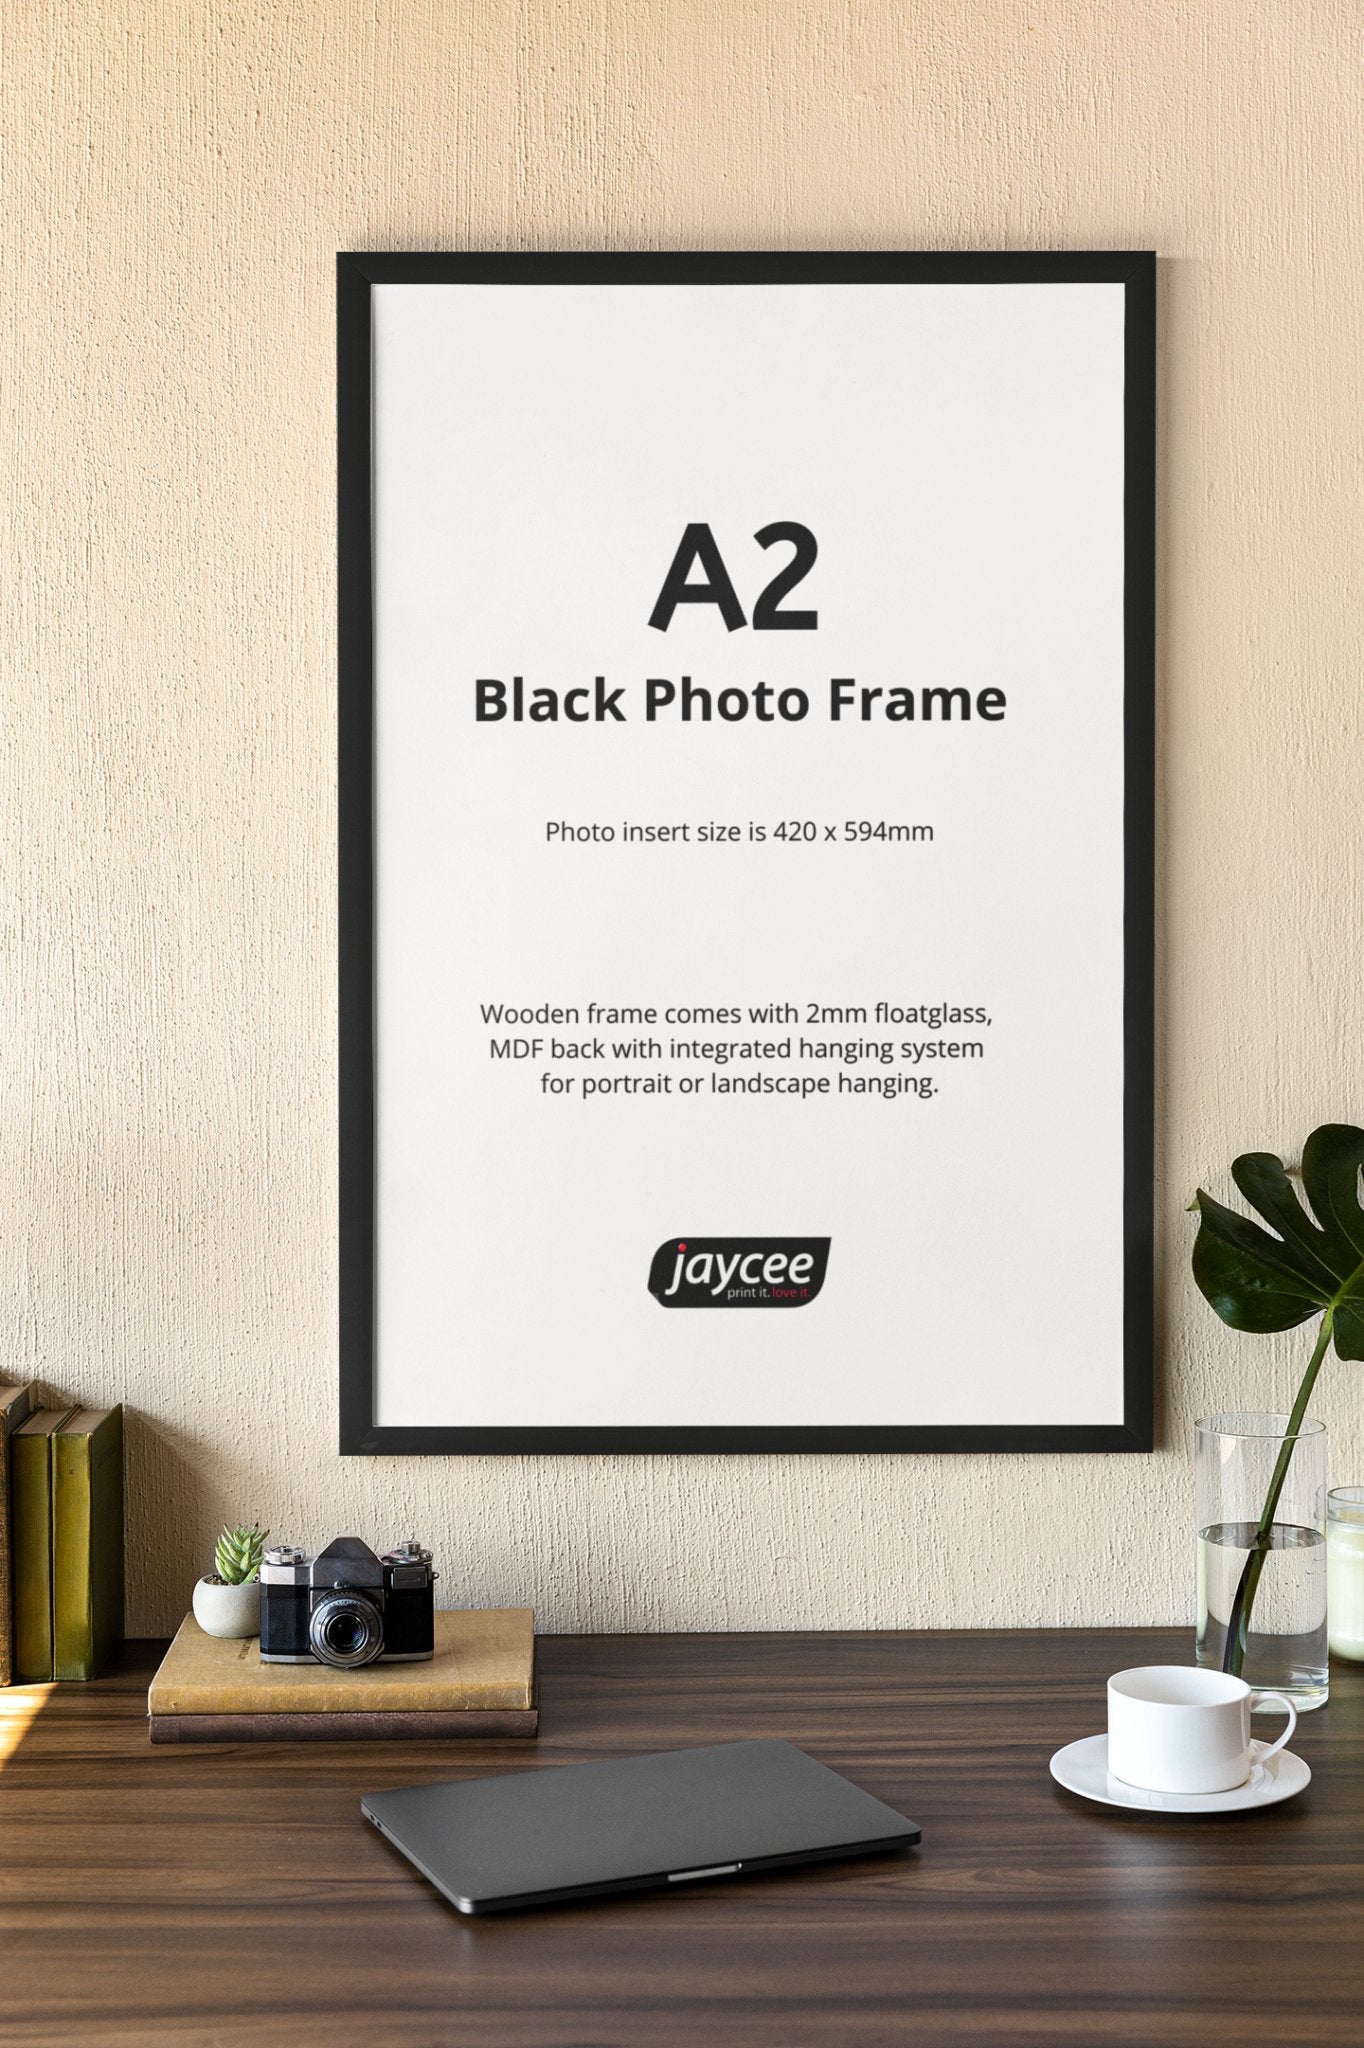 A2 Black Photo Frame - Jaycee